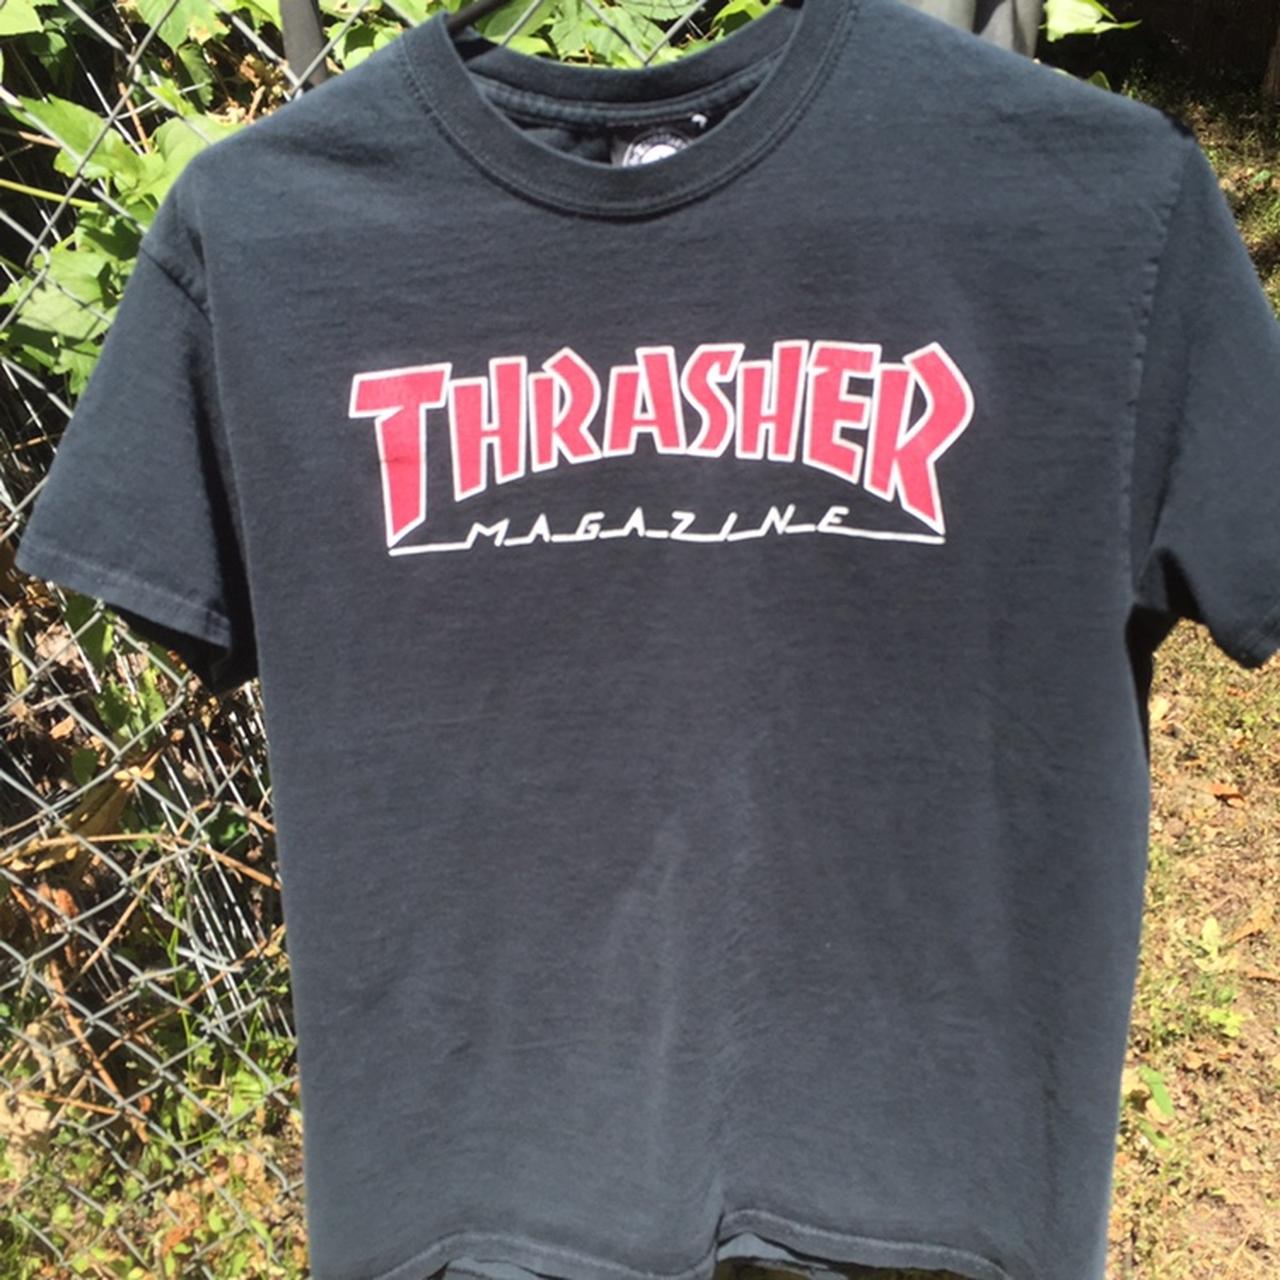 Vintage Thrasher Magazine Shirt Size Medium - Depop